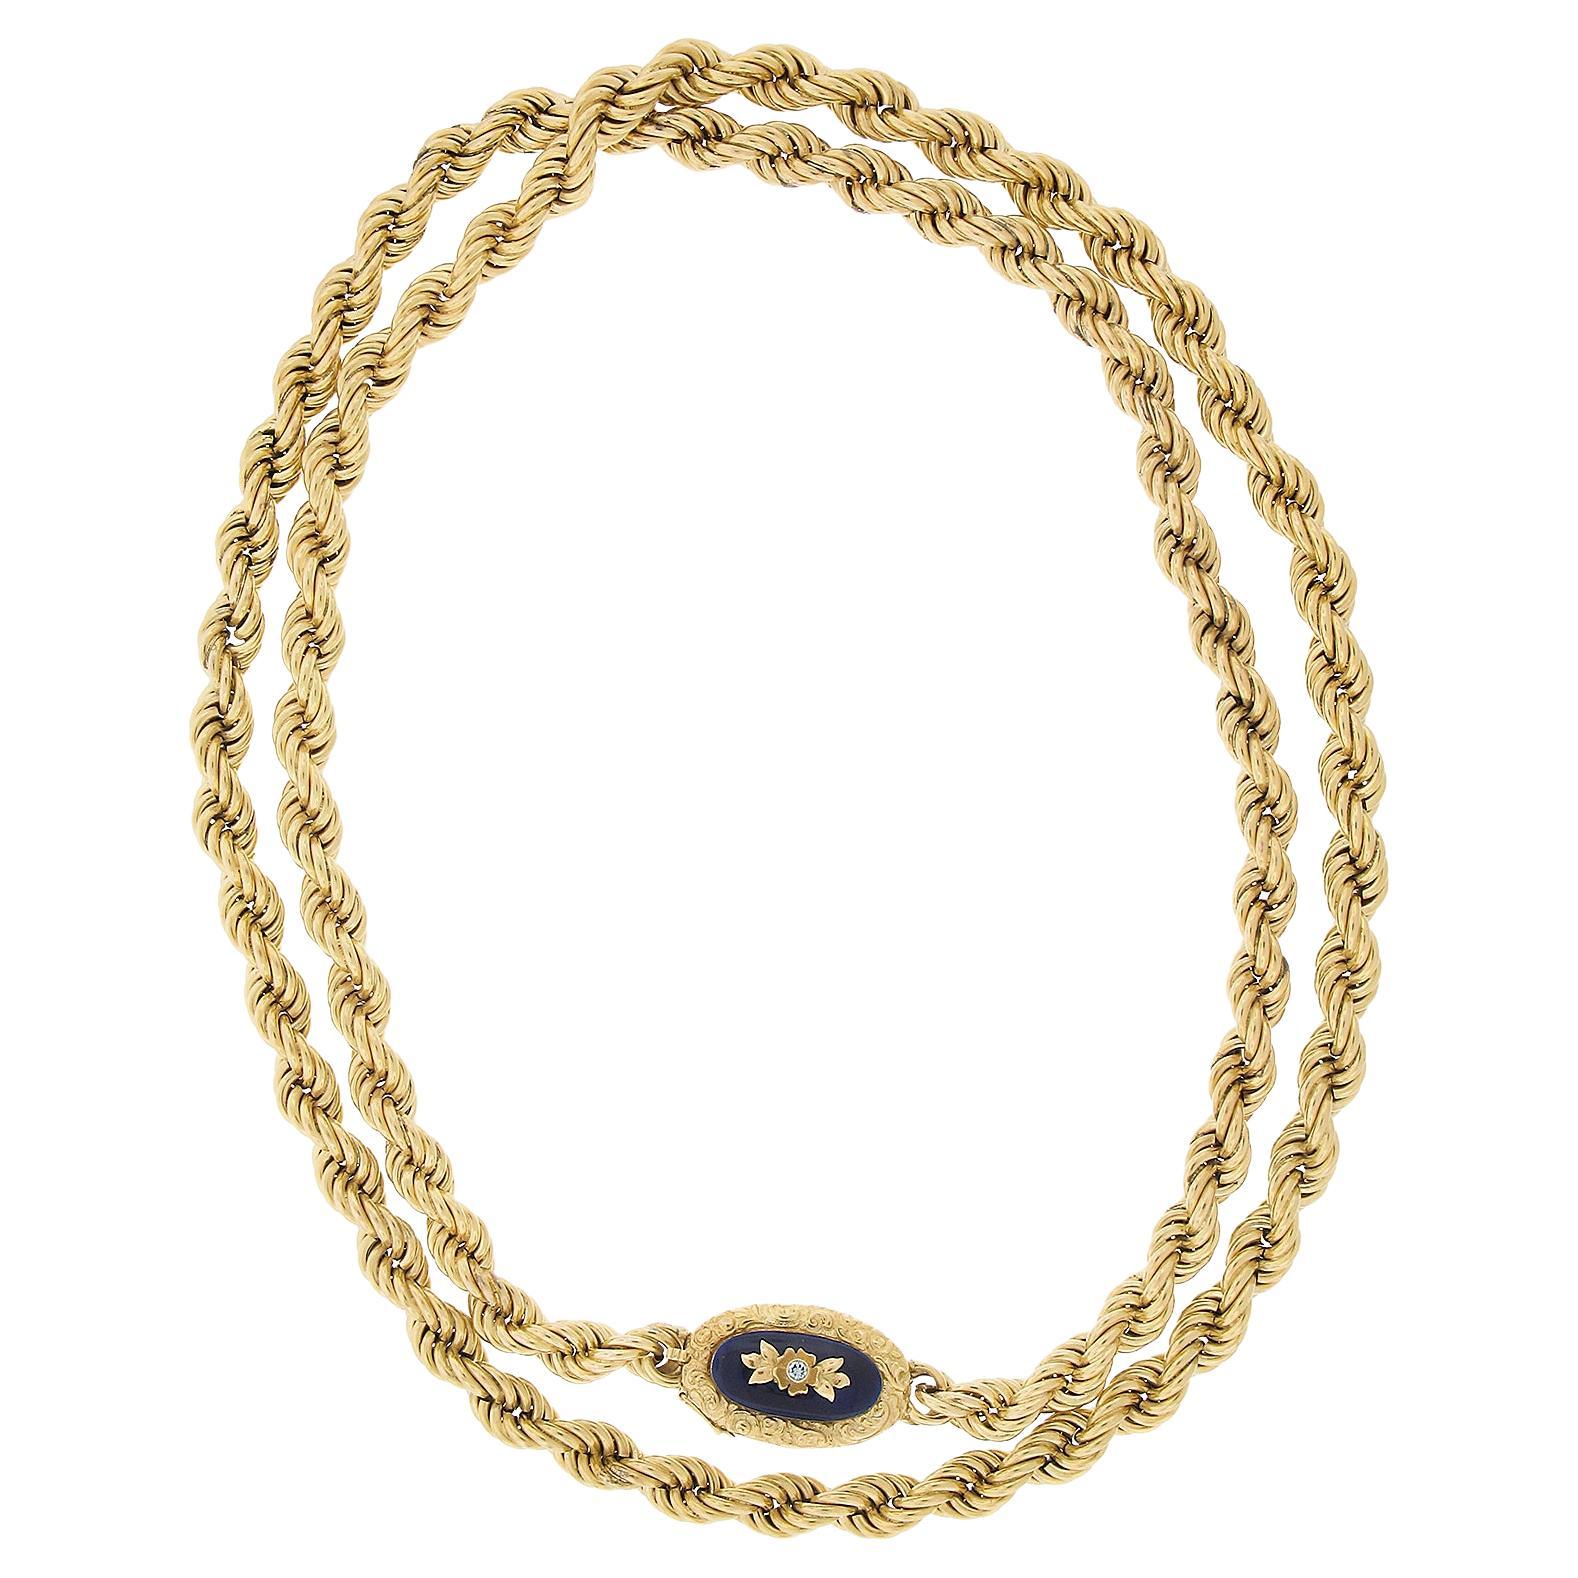 Vintage 14K Gold 48" 10mm Rope Chain Necklace w/ Repousse Enamel Clasp